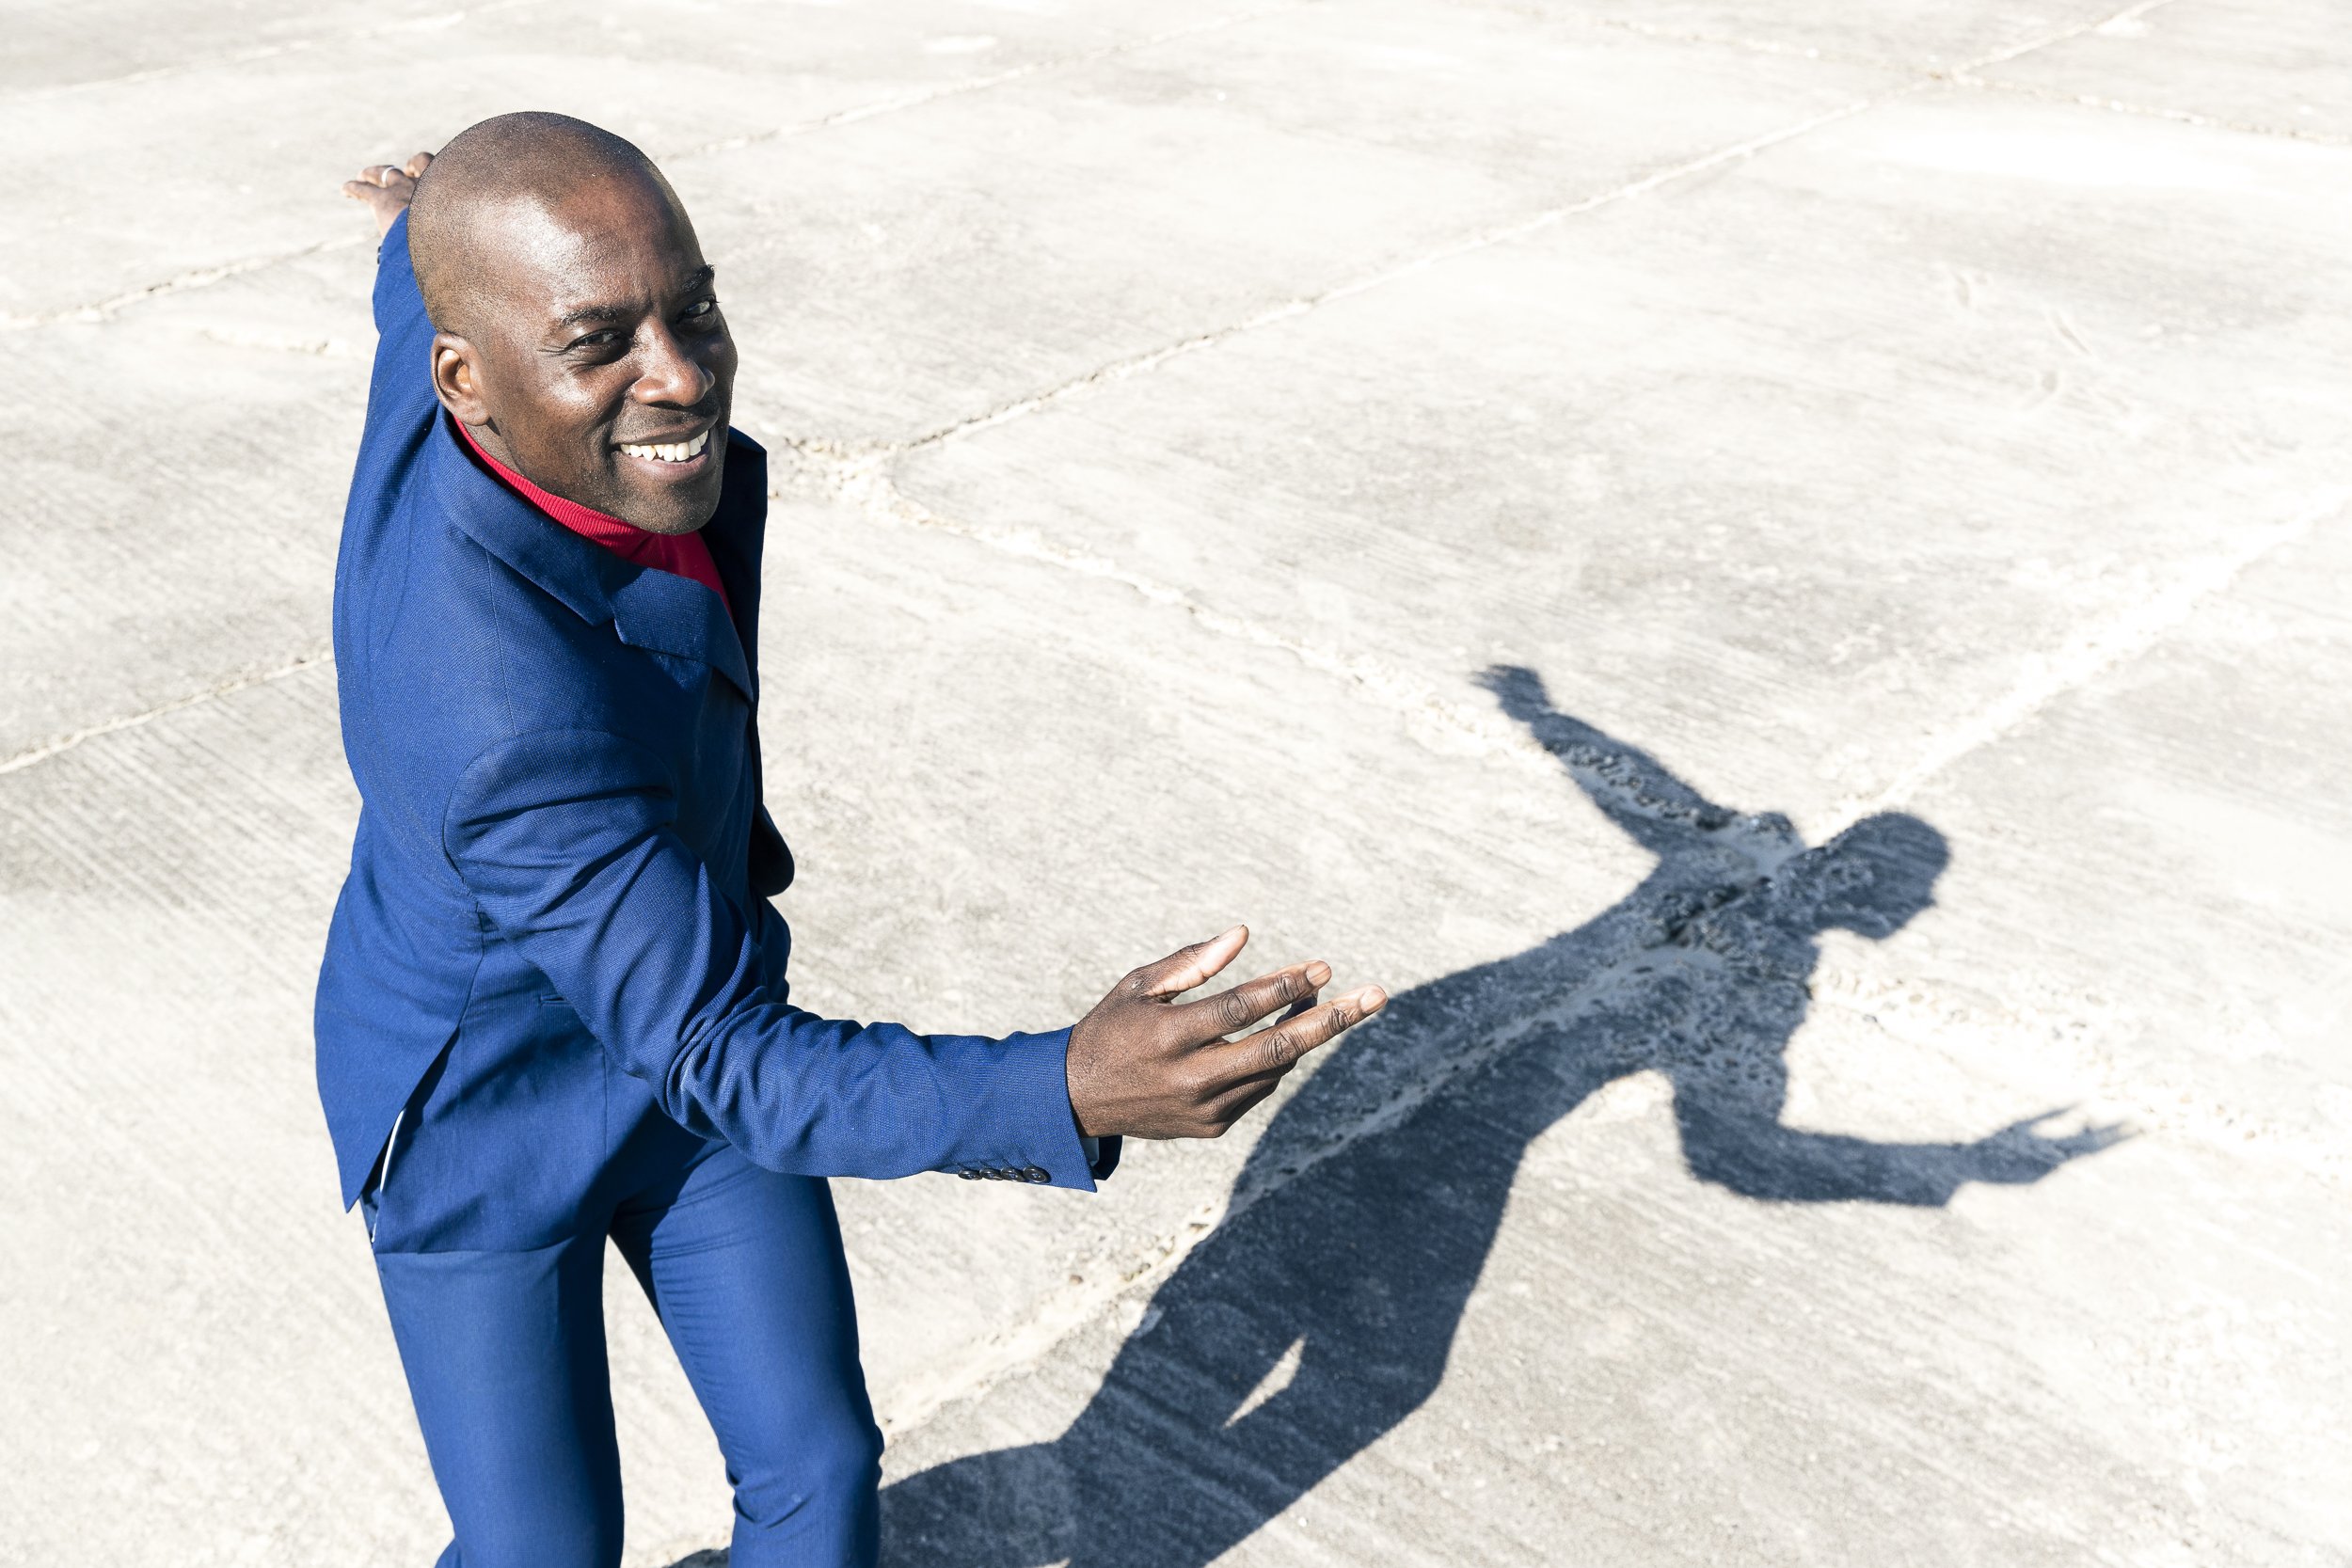 Lifestyle photo of man in suit dances on concrete